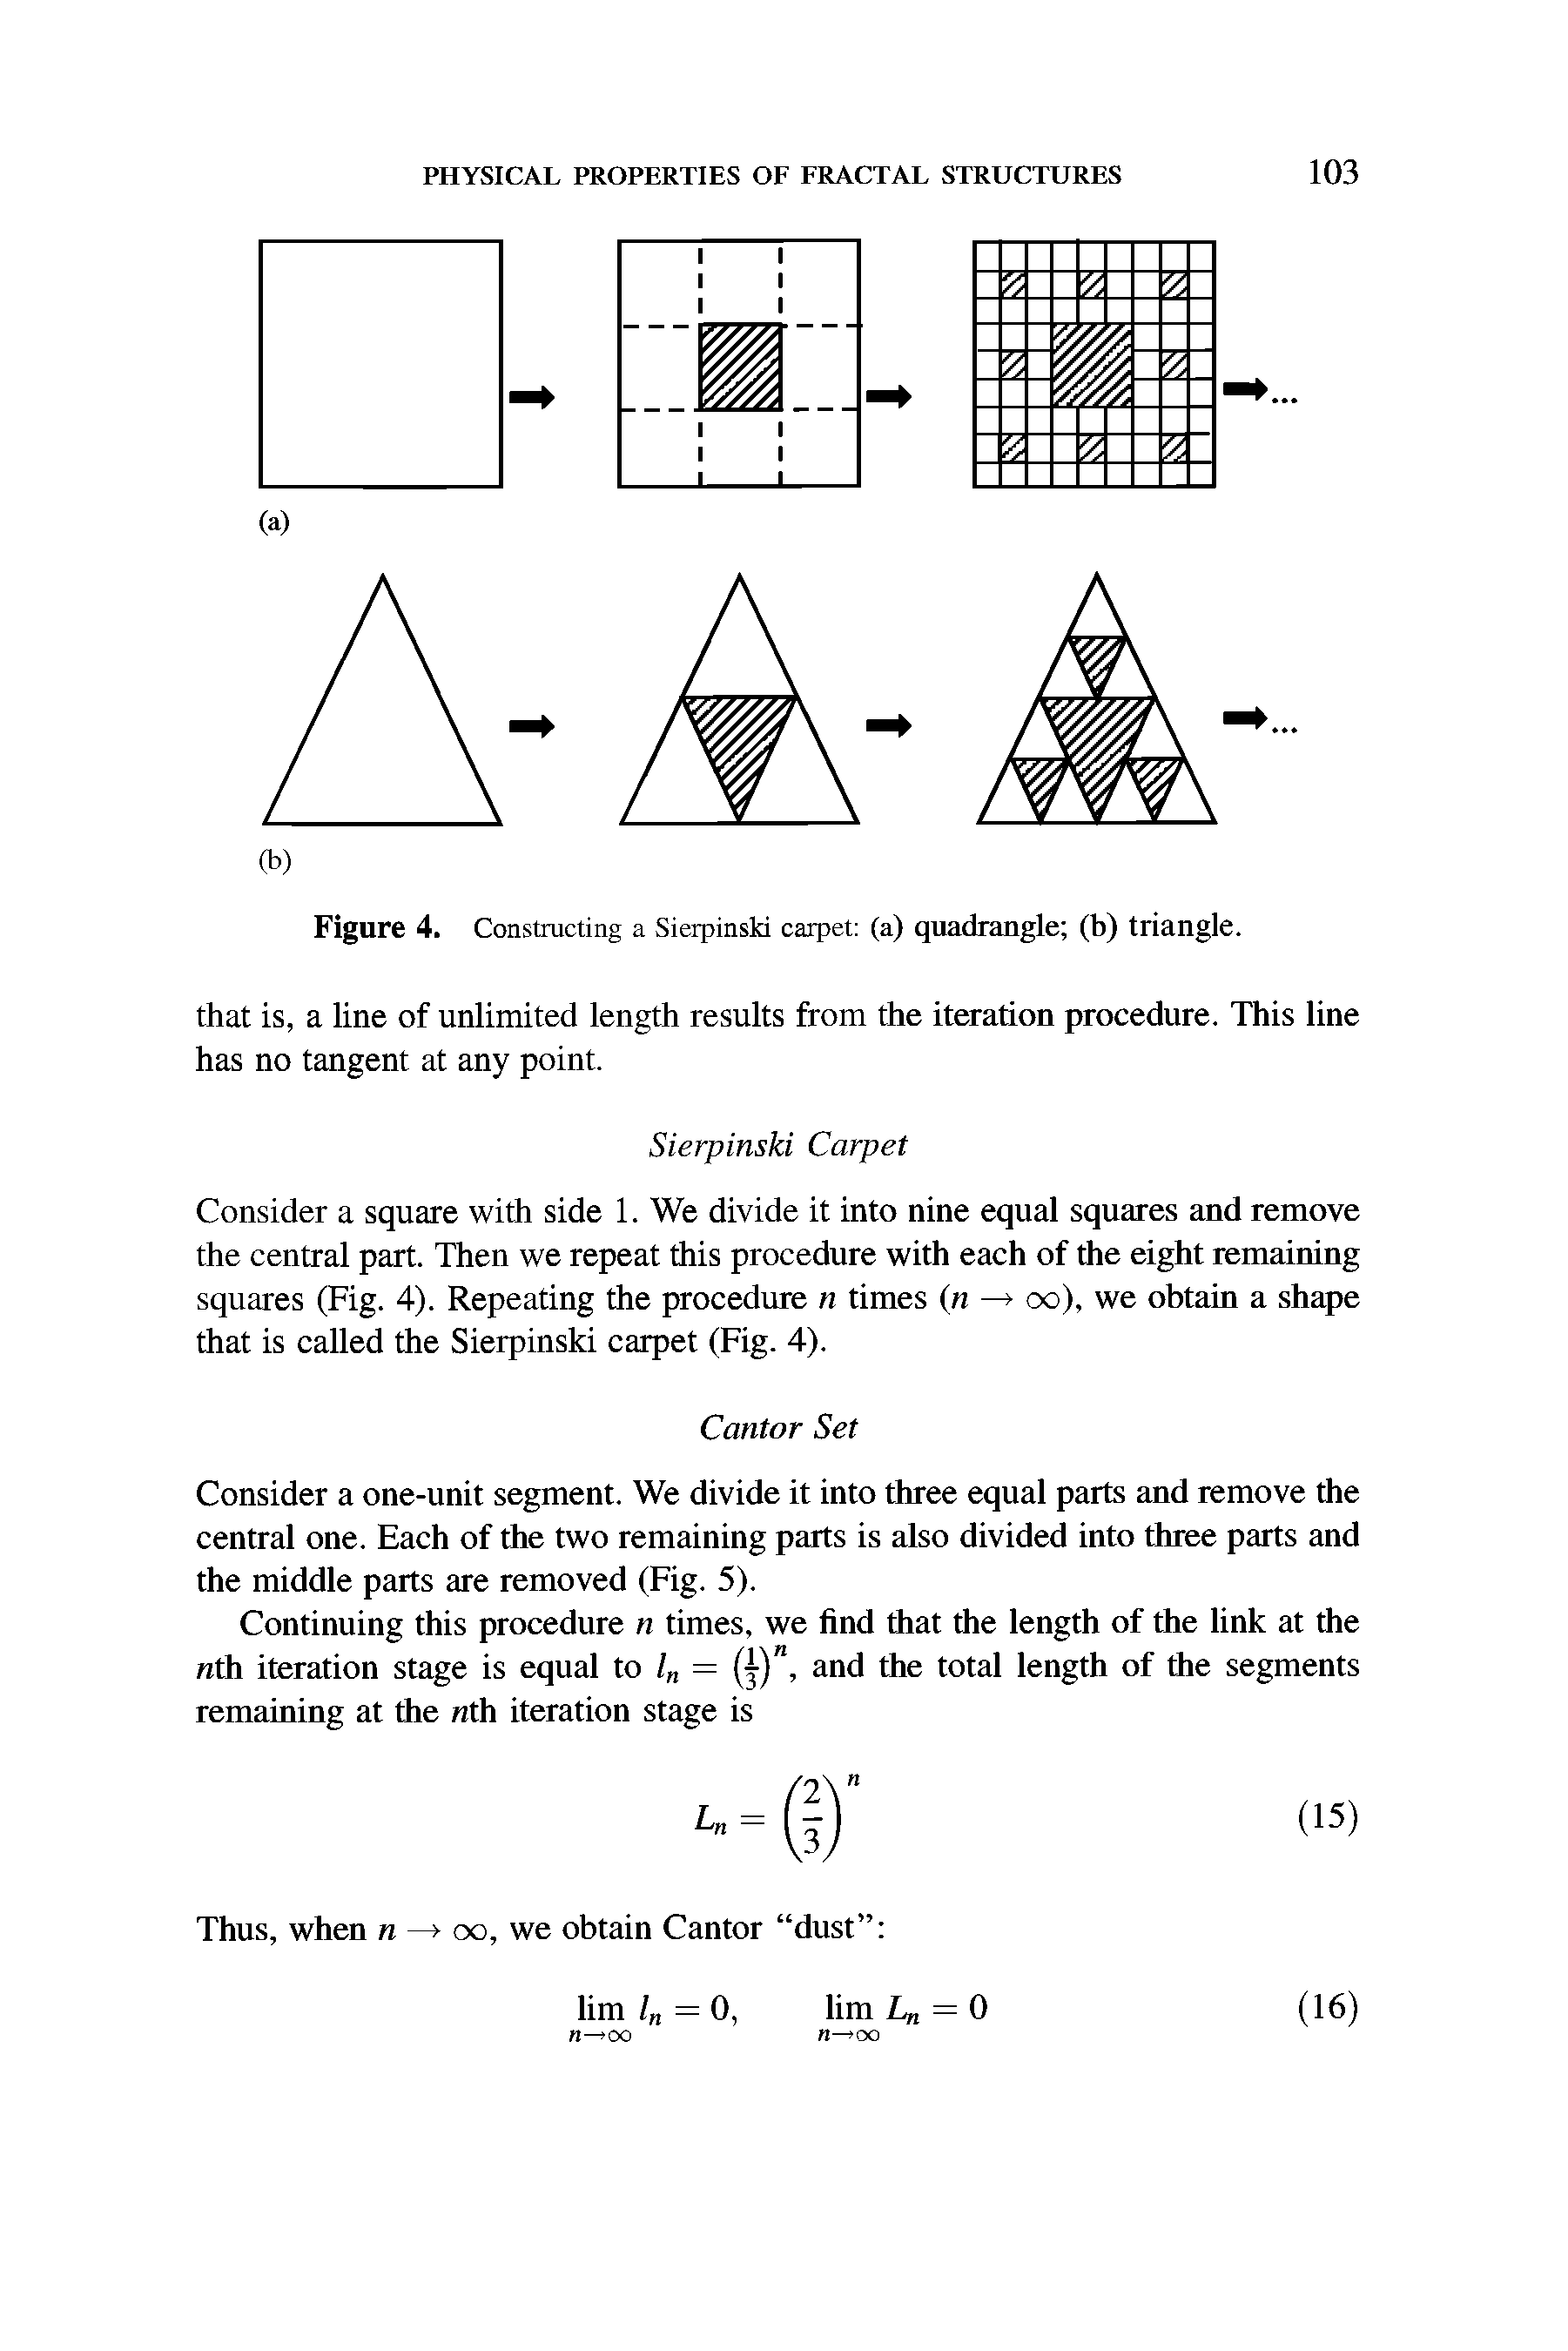 Figure 4. Constructing a Sierpinski carpet (a) quadrangle (b) triangle.